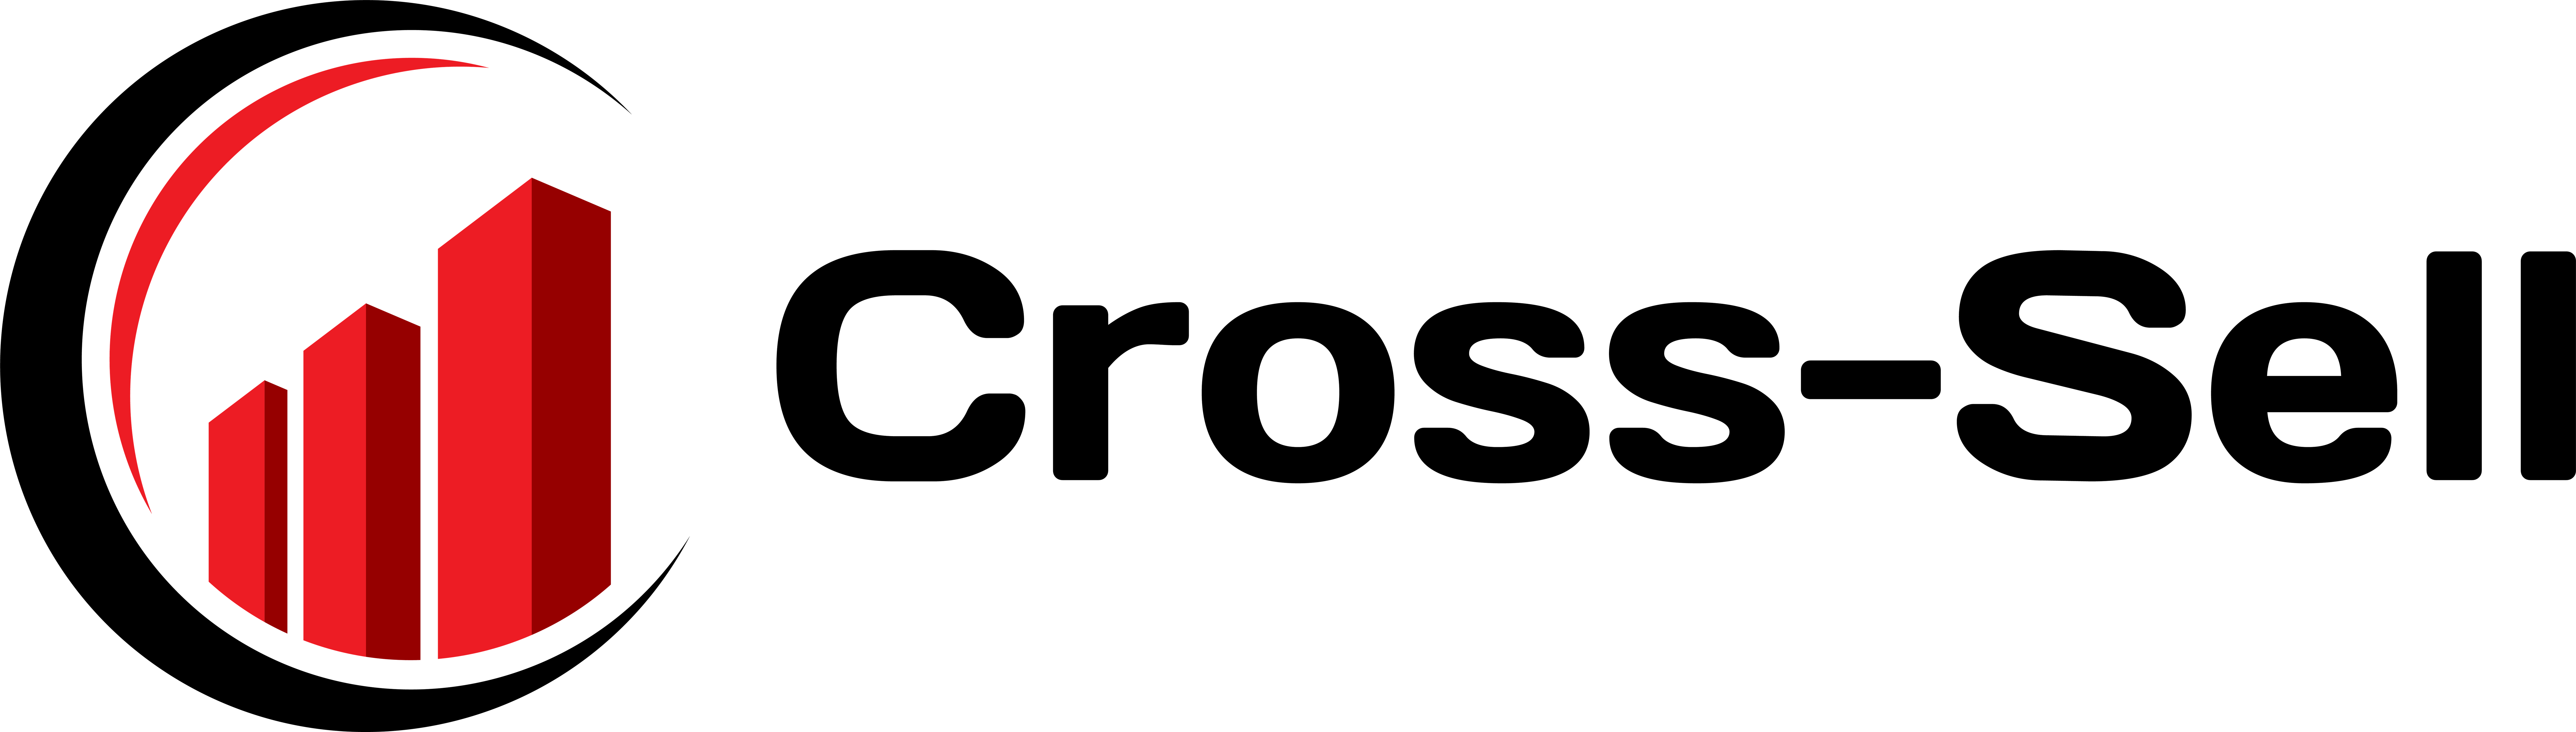 Cross-Sell Logo